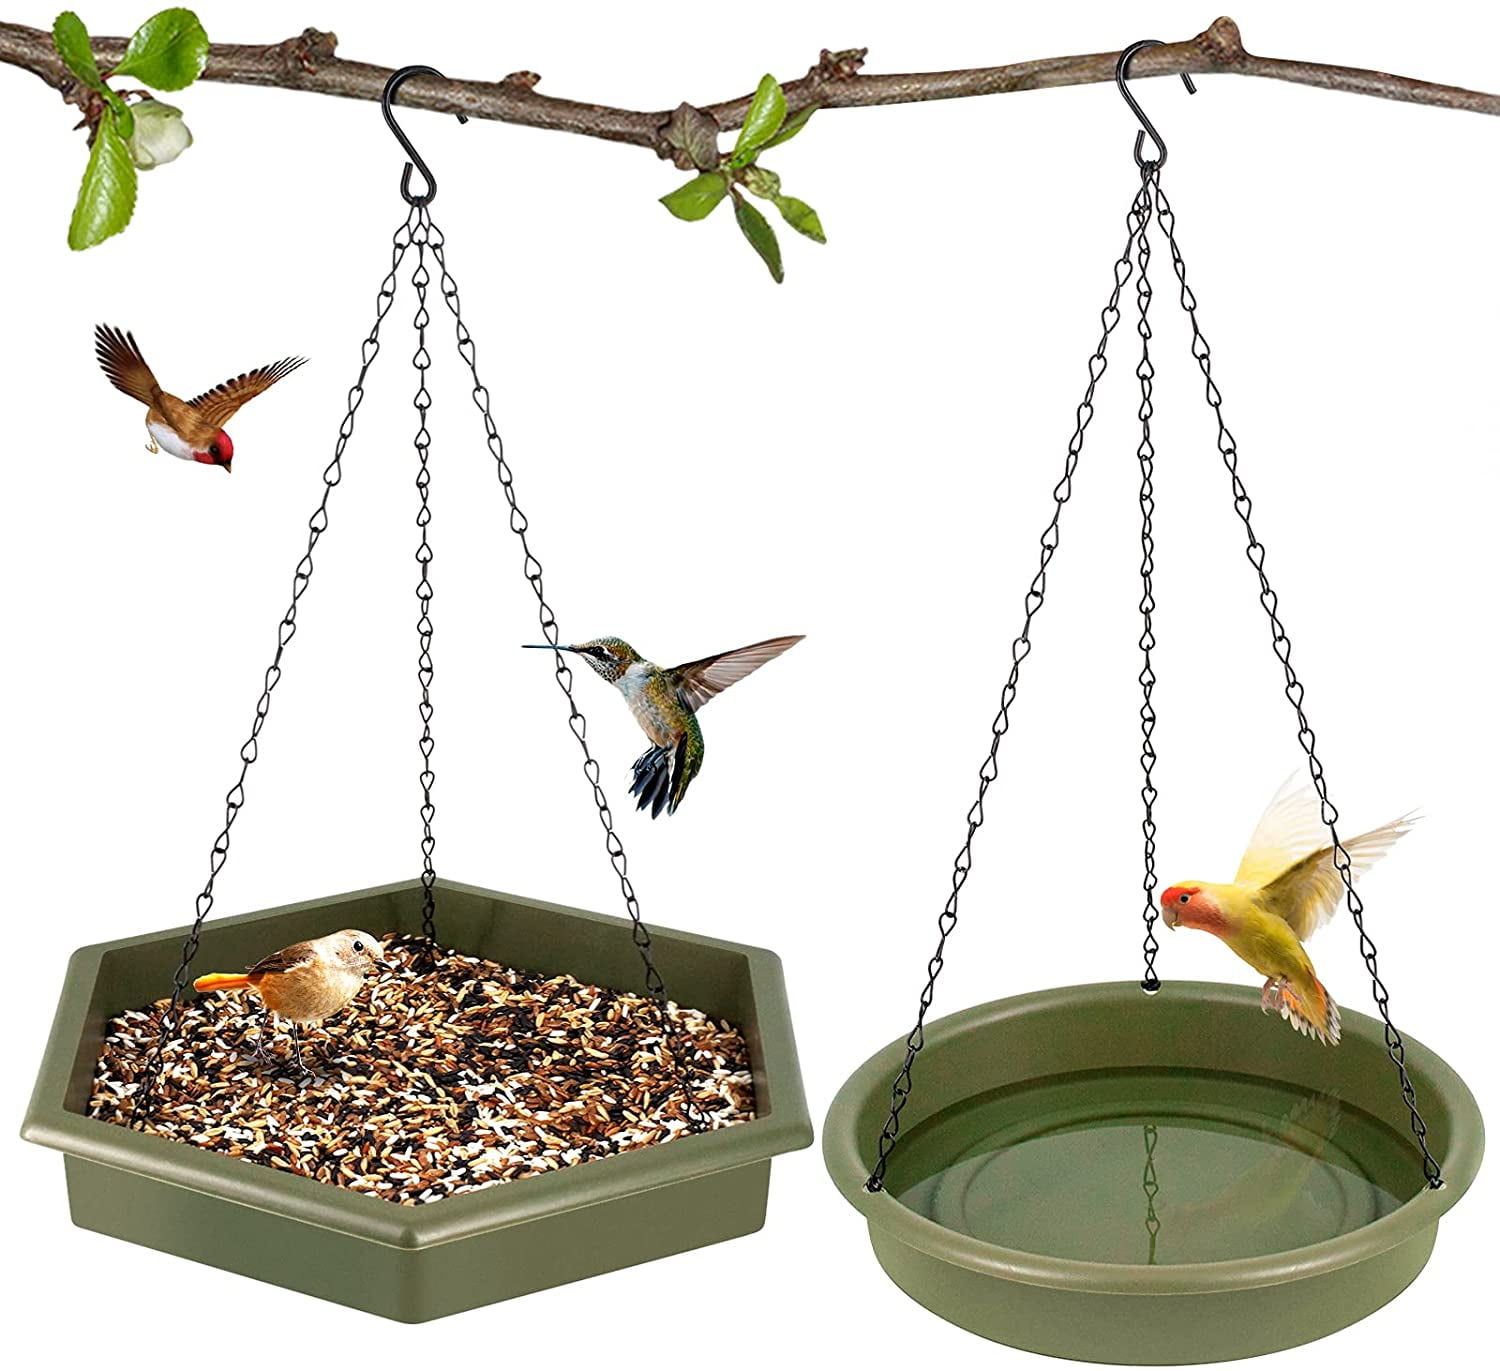 Large hanging outdoor platform/tray bird feeder, 